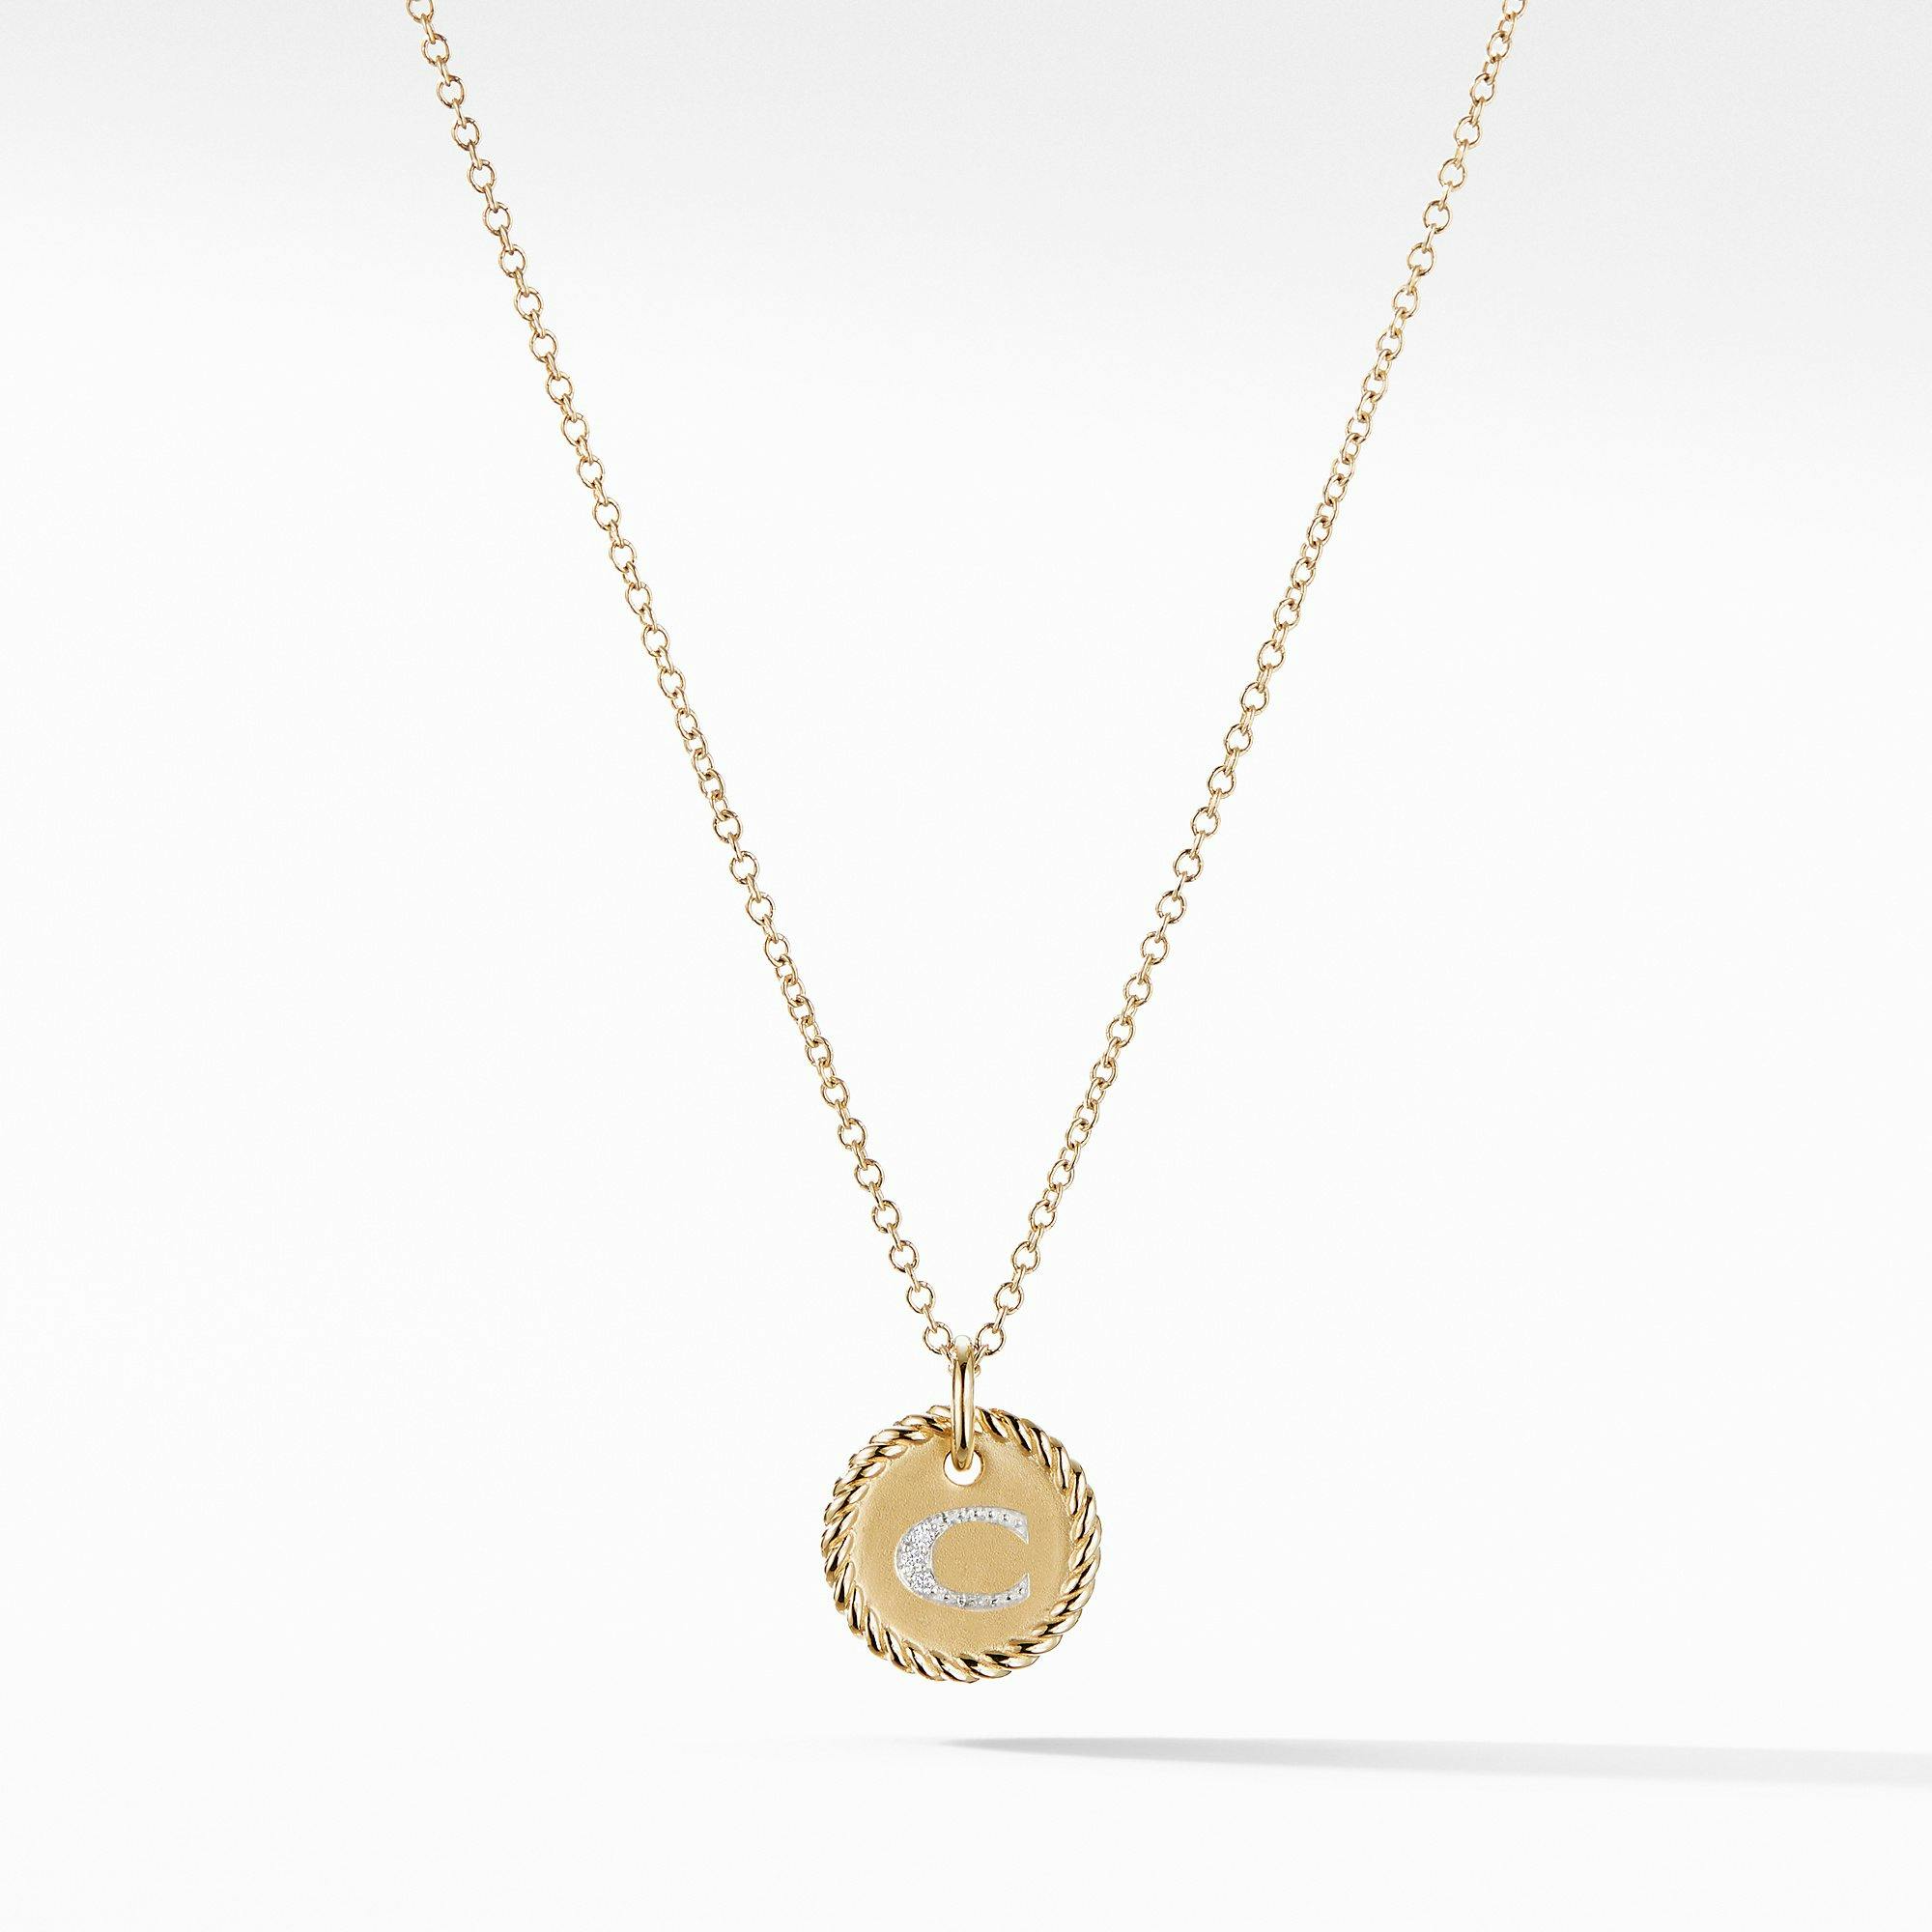 David Yurman "C" Initial Charm Necklace in 18k Yellow Gold with Diamonds